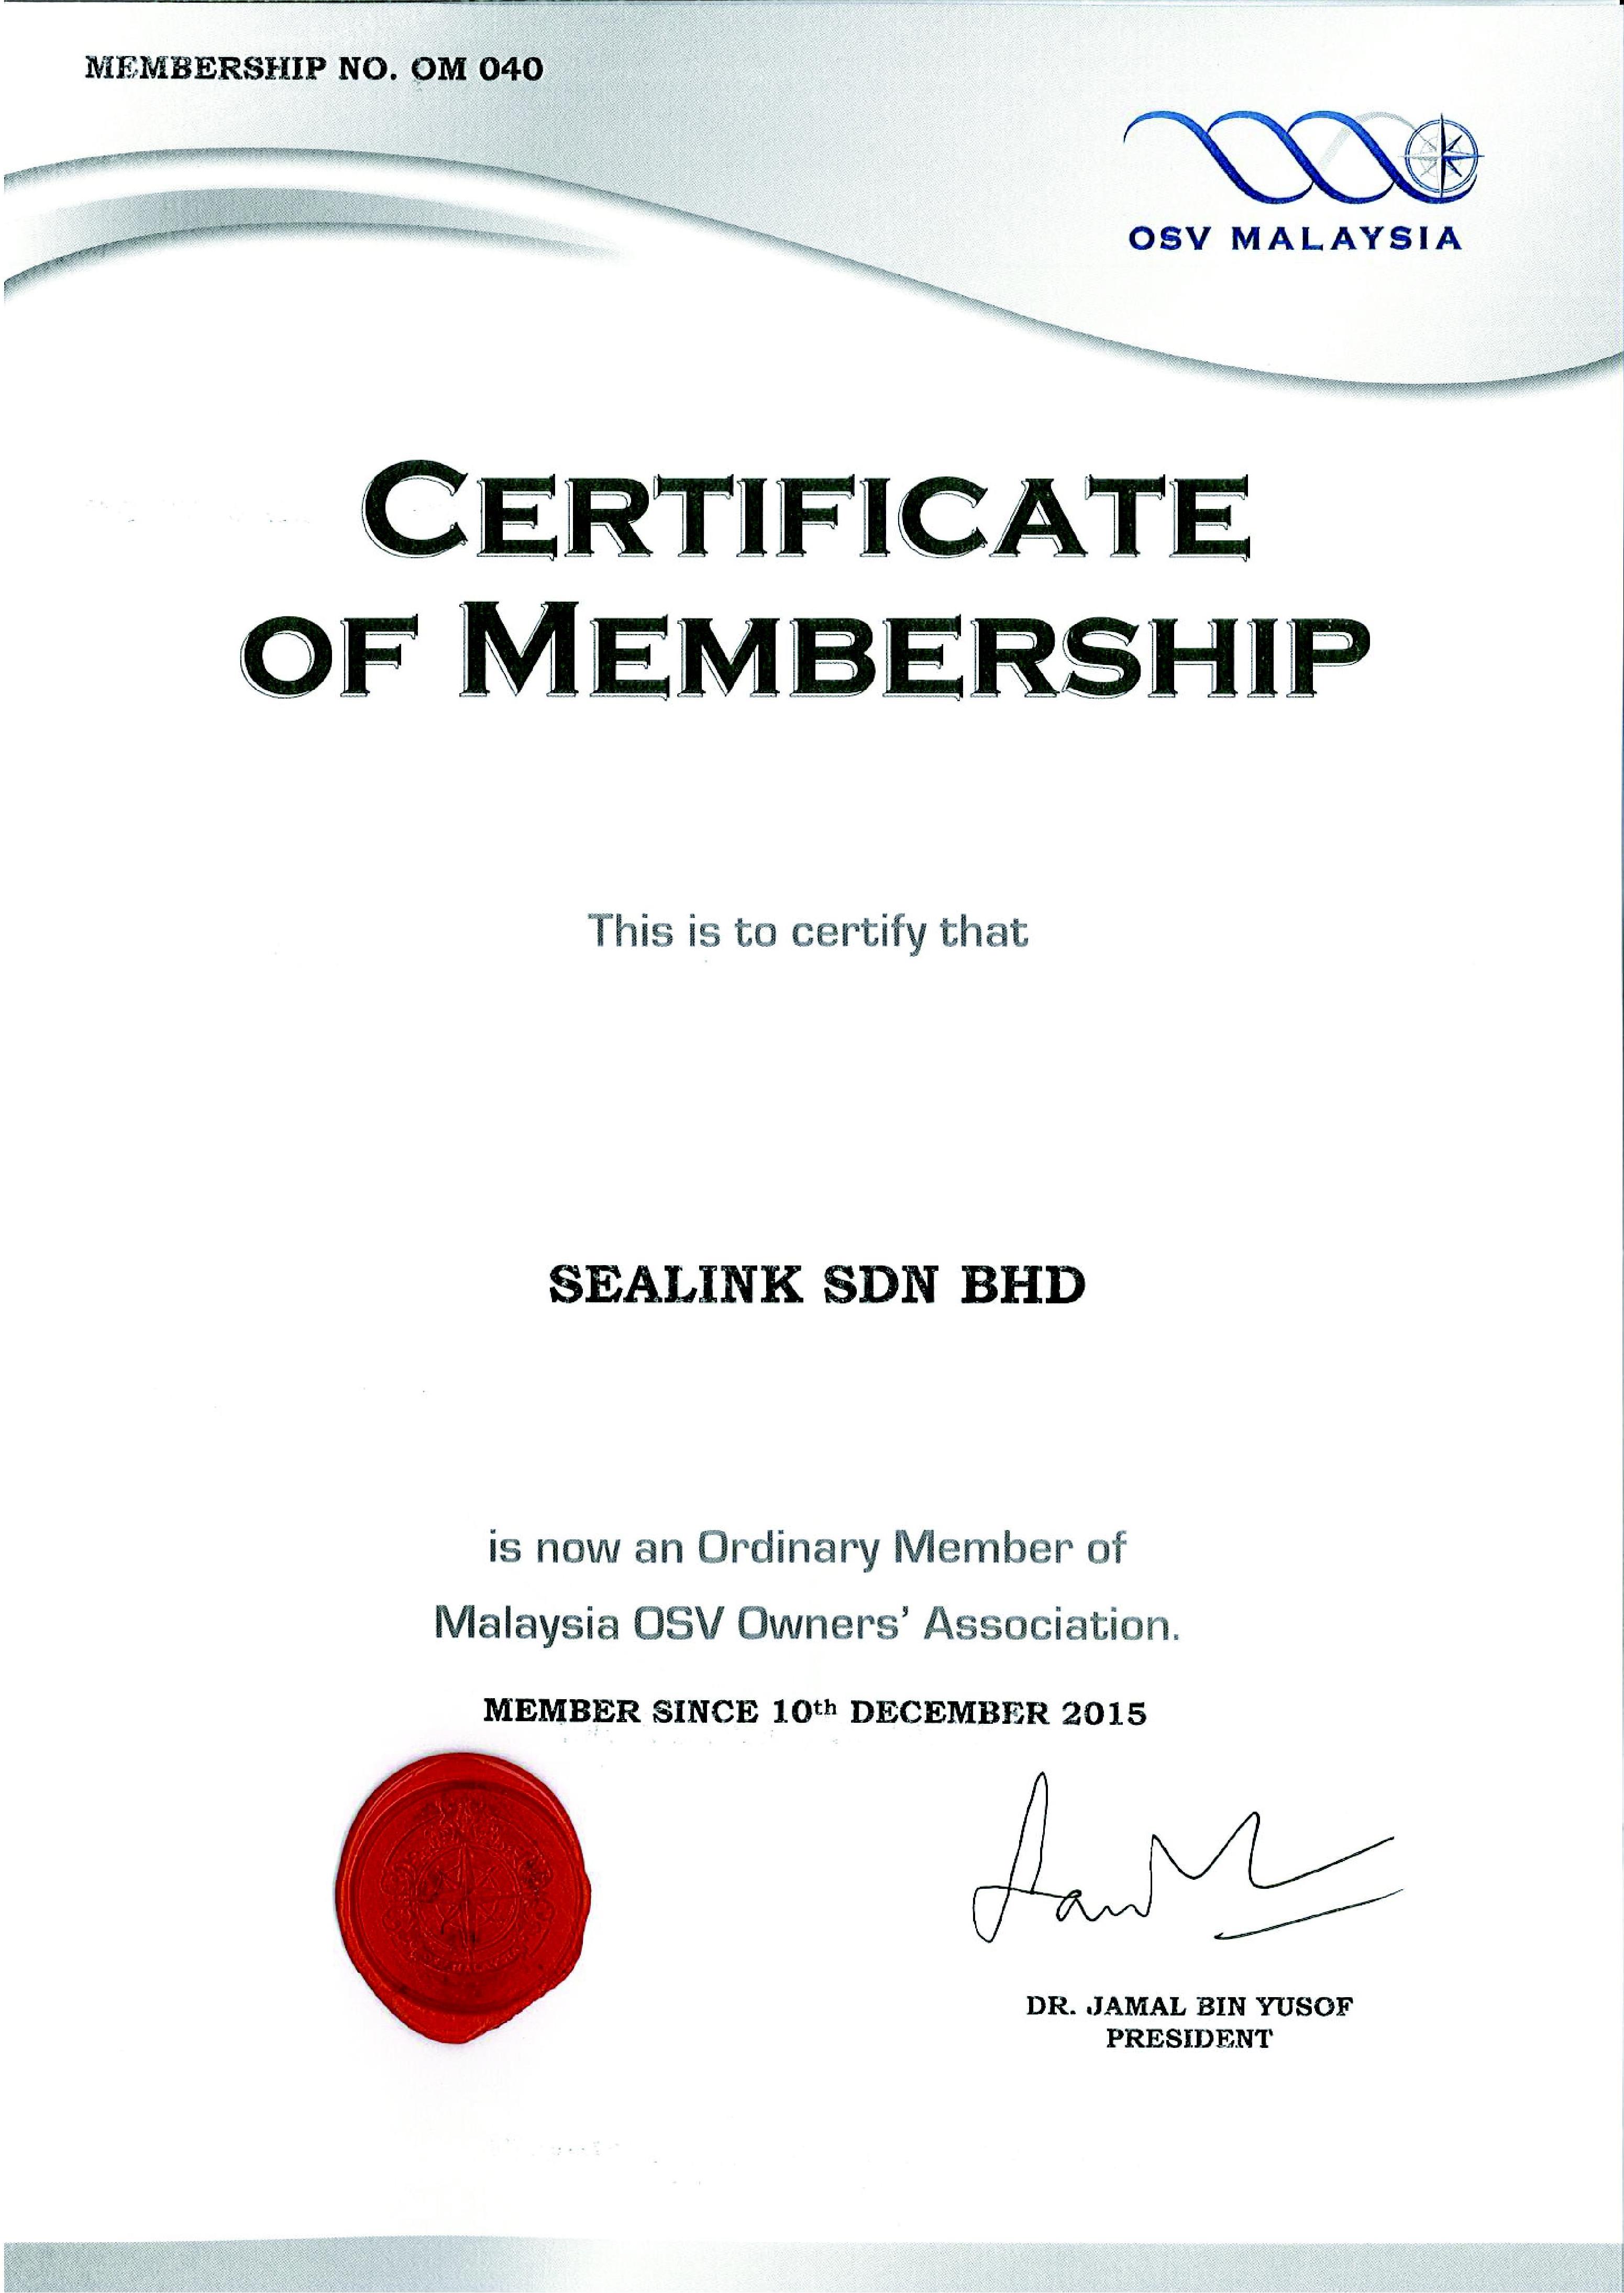 Recognition of Sealink International Berhad